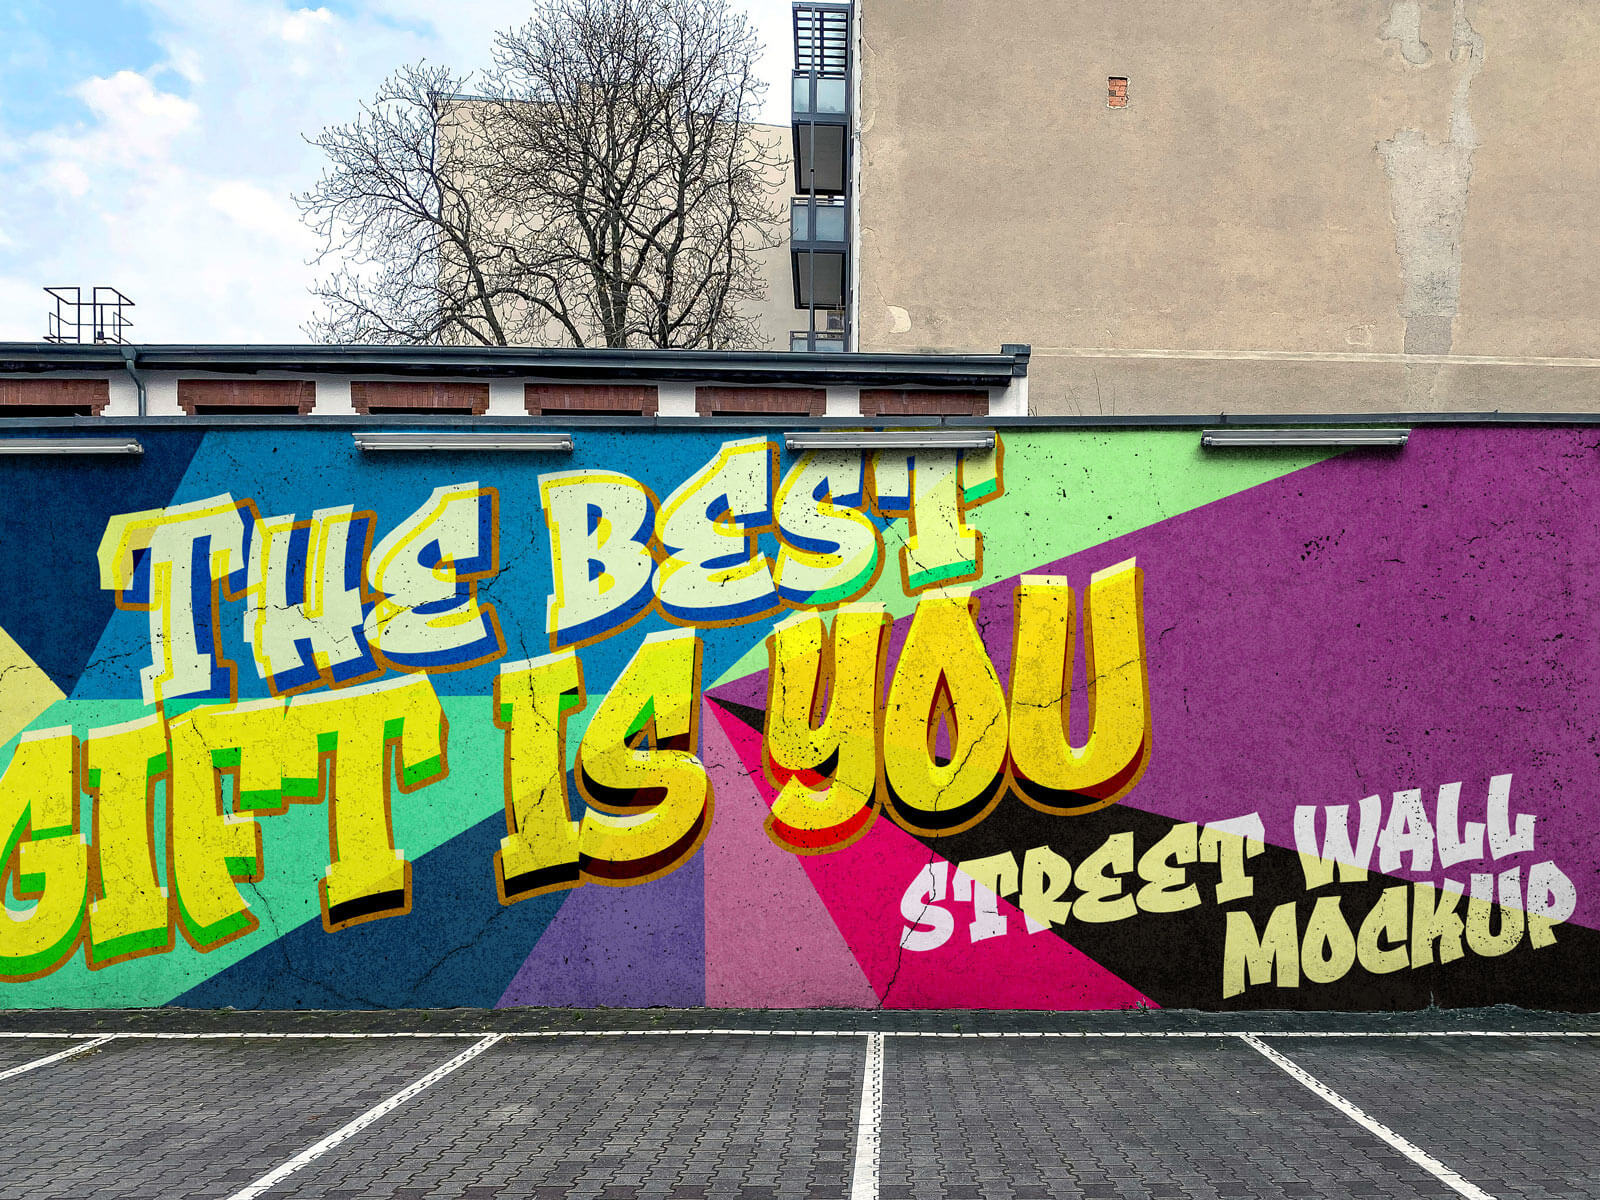 Free-Berlin-Street-Wall-Painting-Mockup-PSD